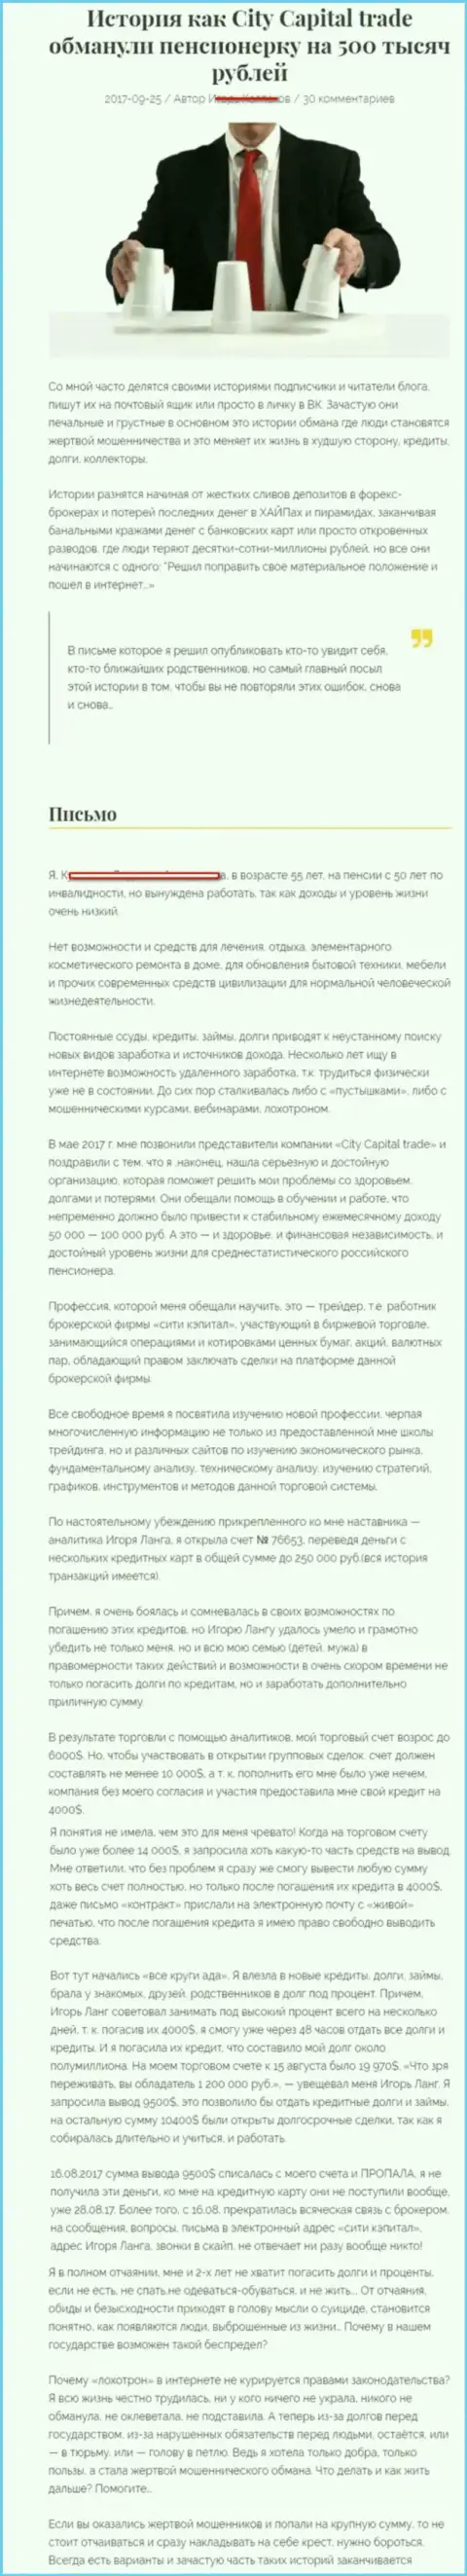 СитиКапитал Трейд обманули клиентку пенсионного возраста - инвалида на сумму 500 000 рублей - МОШЕННИКИ !!!